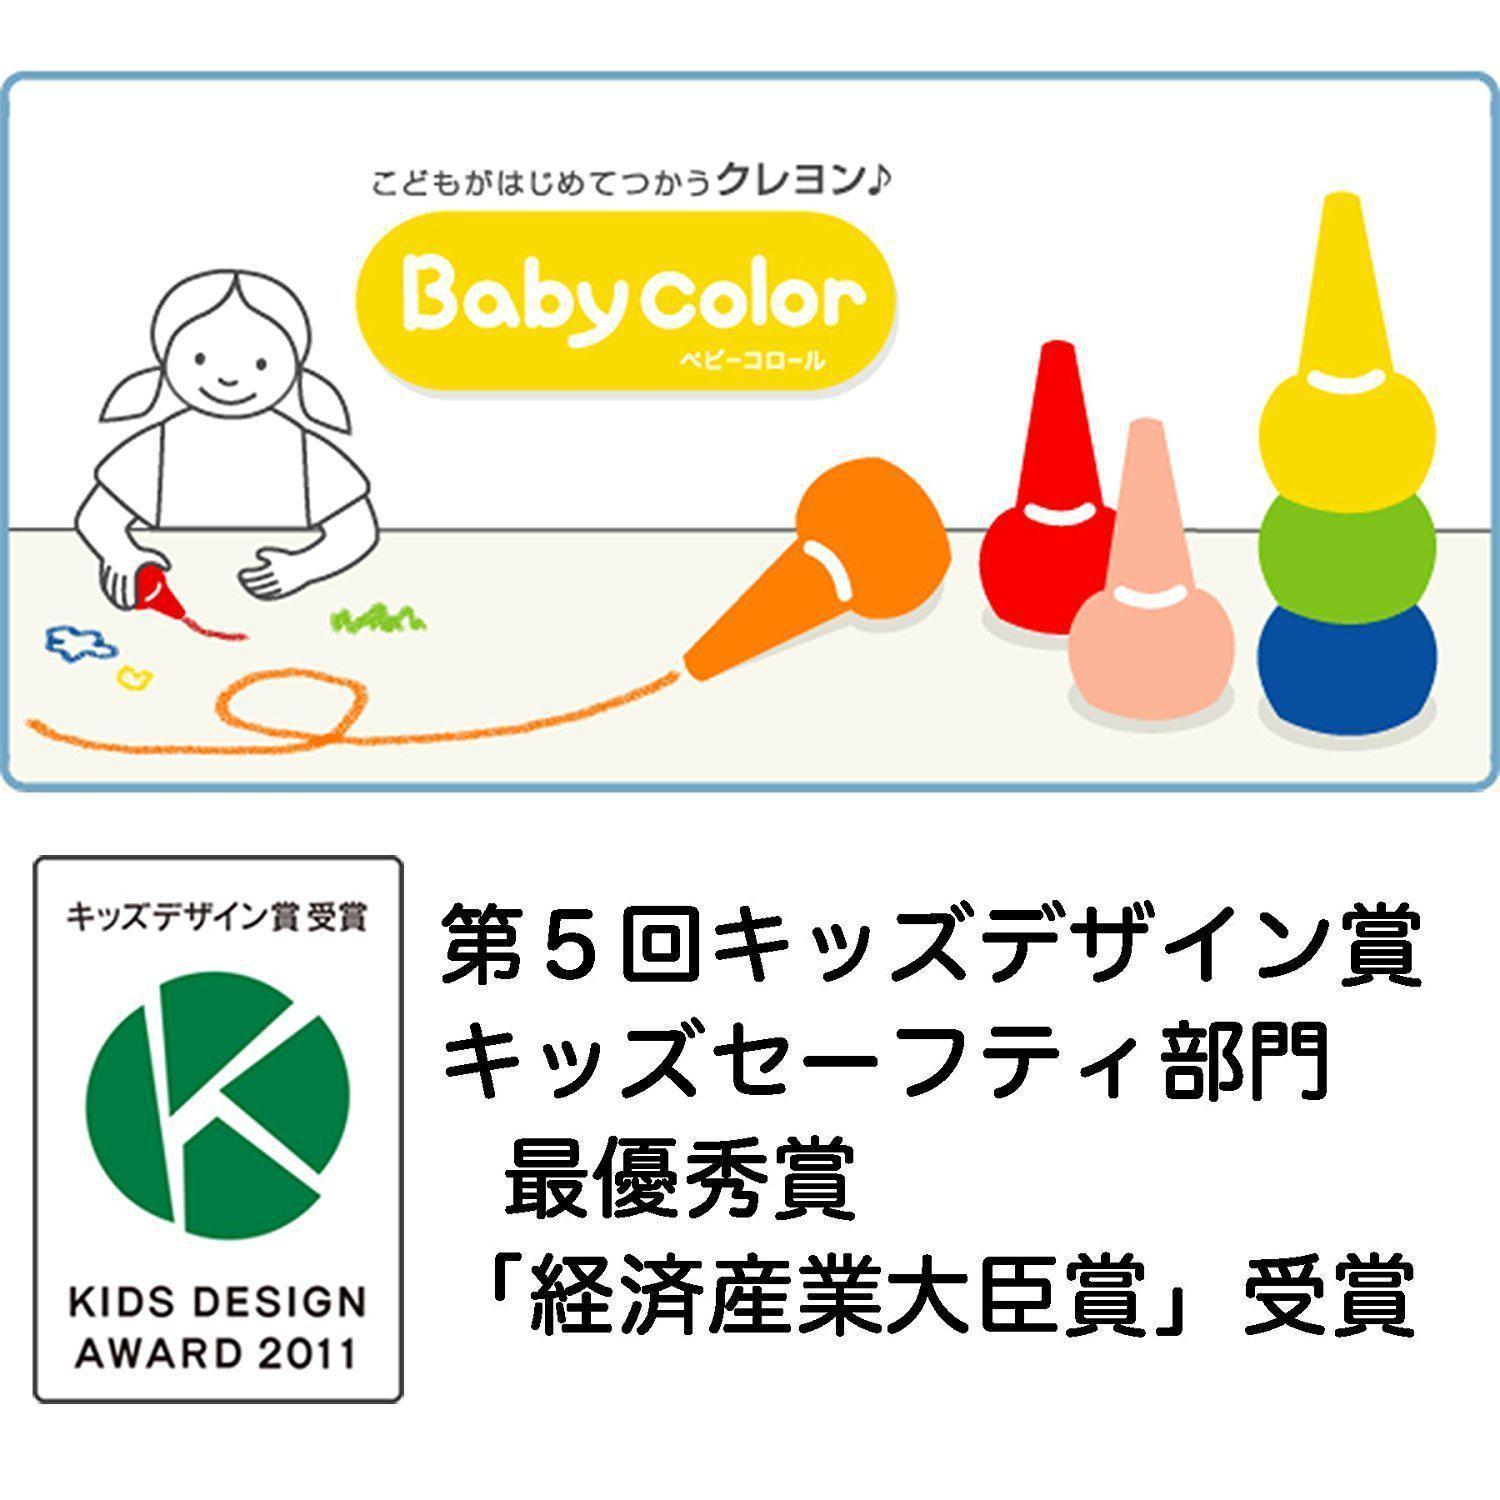 Rangs Japan Baby Color Crayons 6 Colors